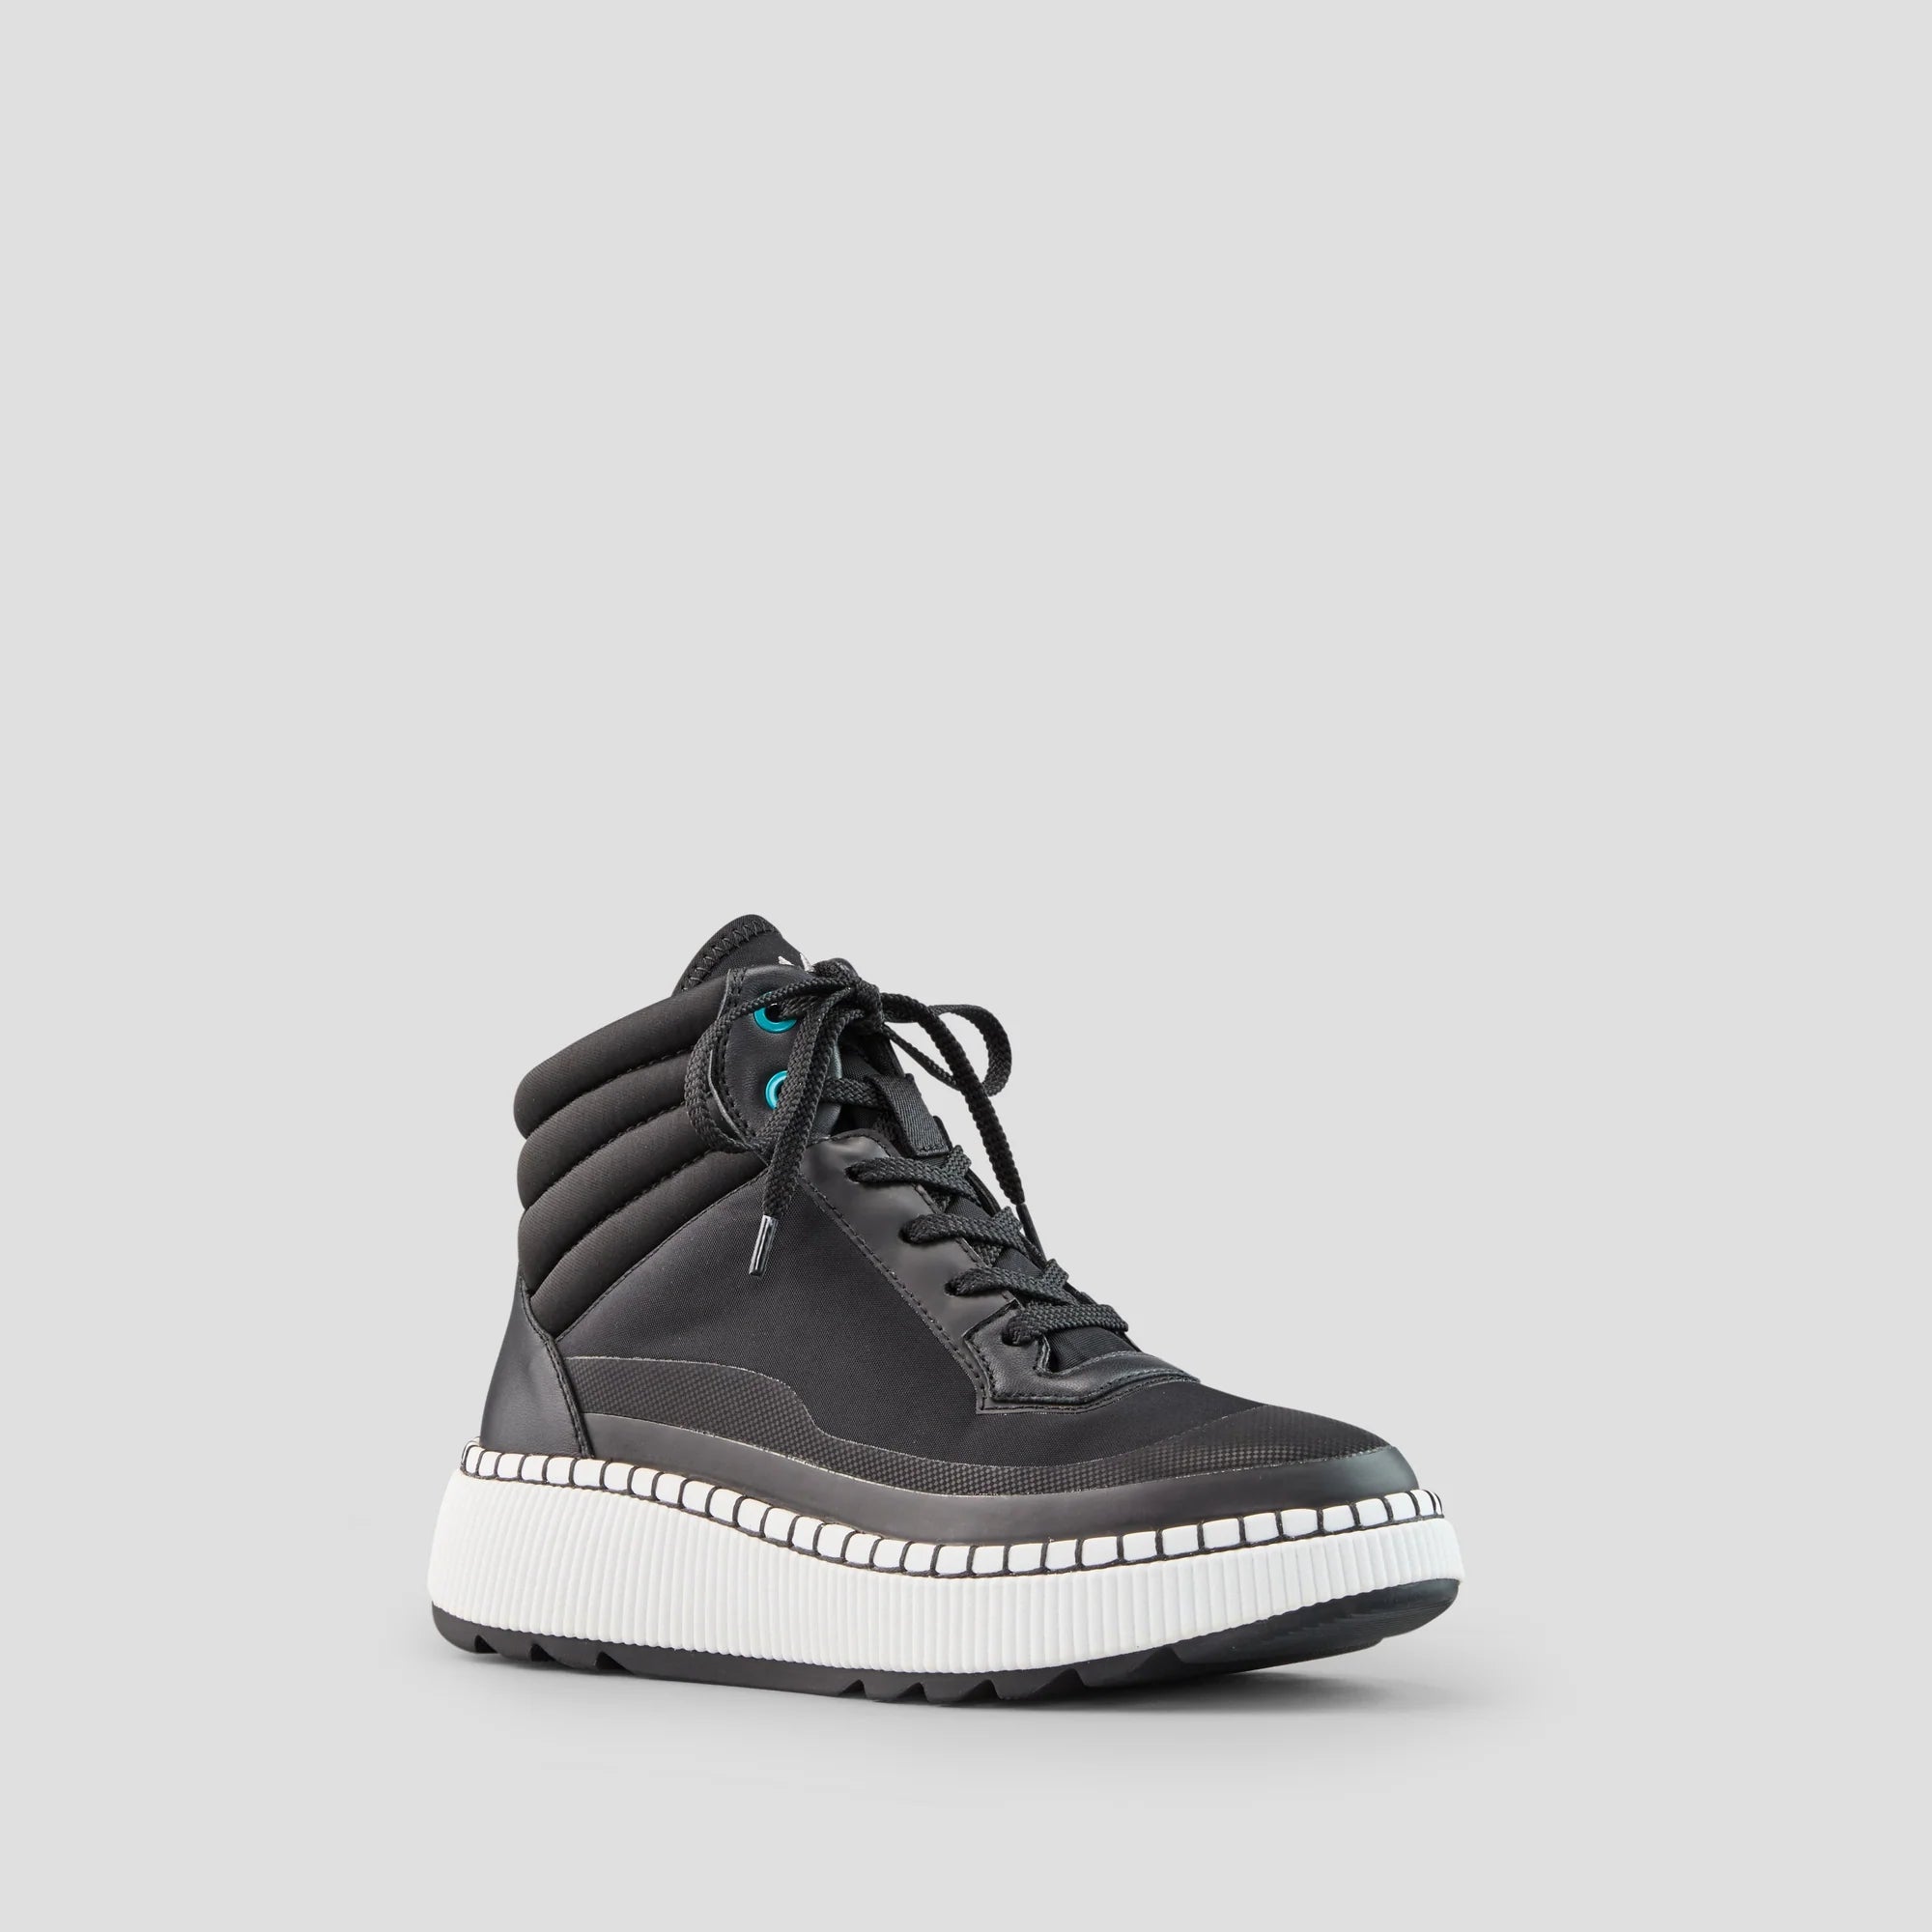 COUGAR SHOES SAVANT - Luxmotion Nylon and Leather Waterproof Sneaker - Boutique Bubbles